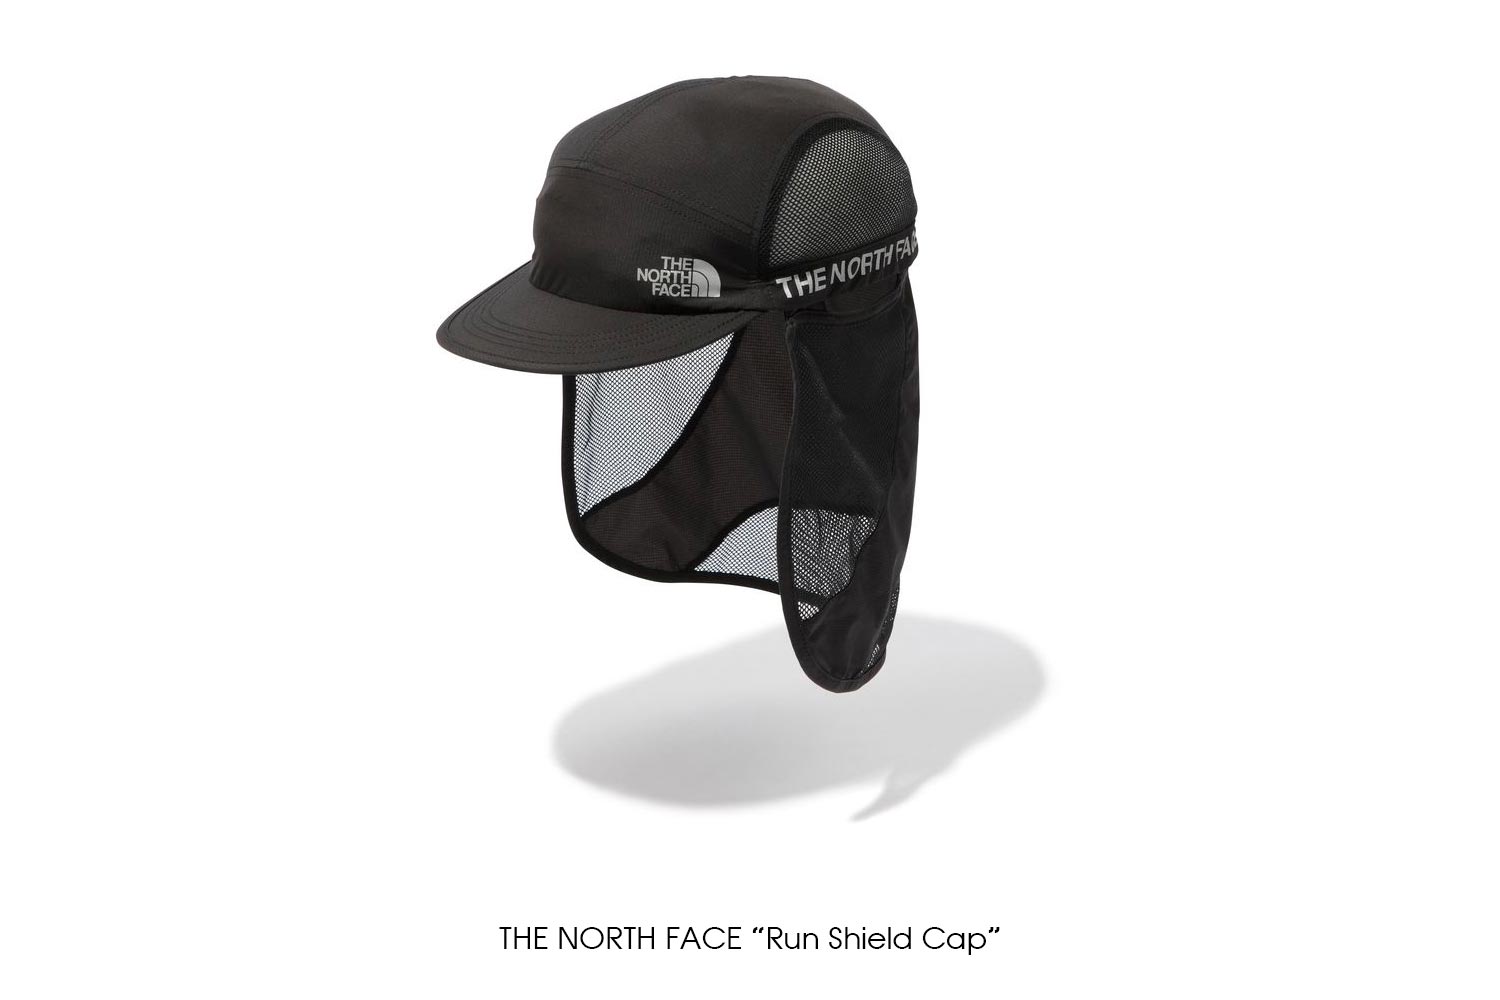 THE NORTH FACE "Run Shield Cap"